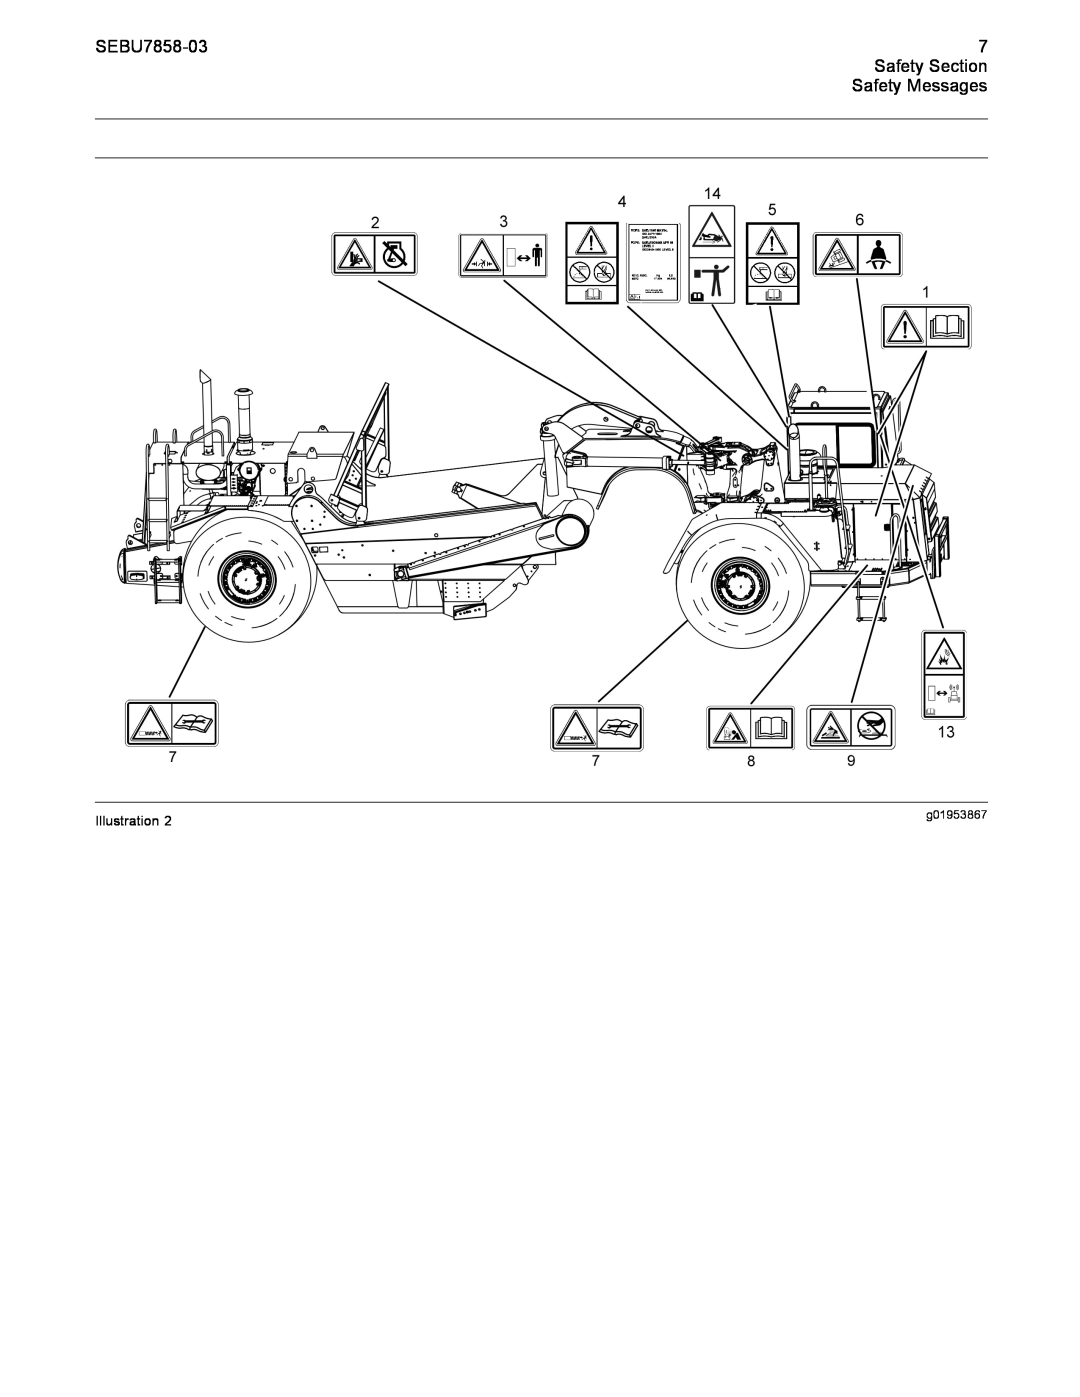 CAT 627G manual SEBU7858-03, Safety Section, Safety Messages, Illustration, g01953867 